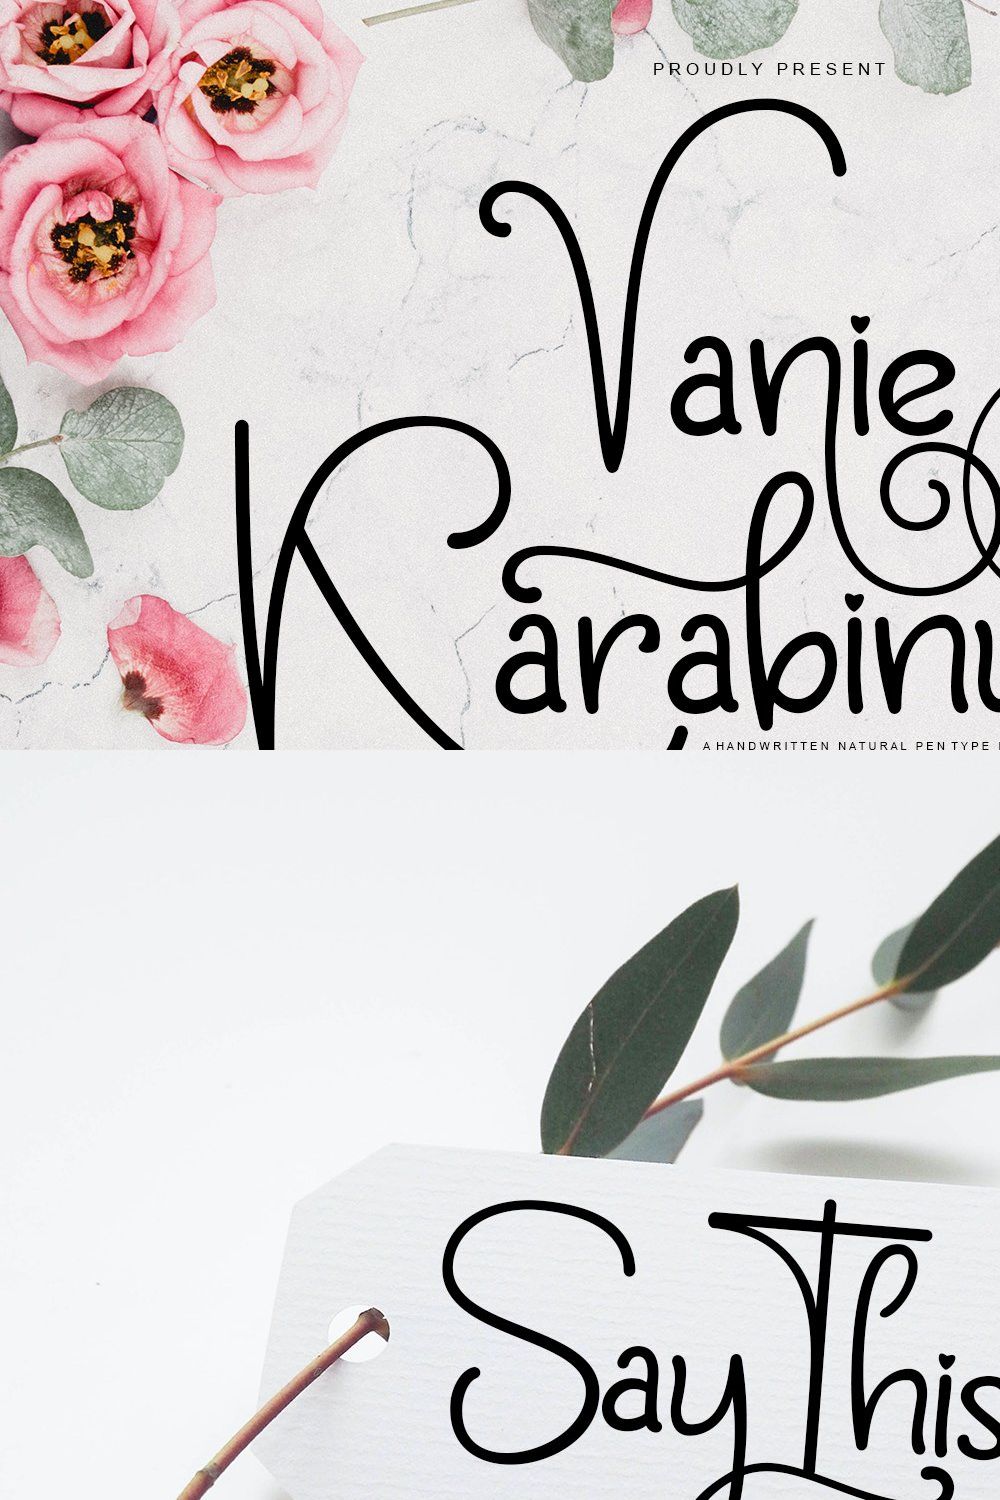 Vanie Karabinya Love pinterest preview image.